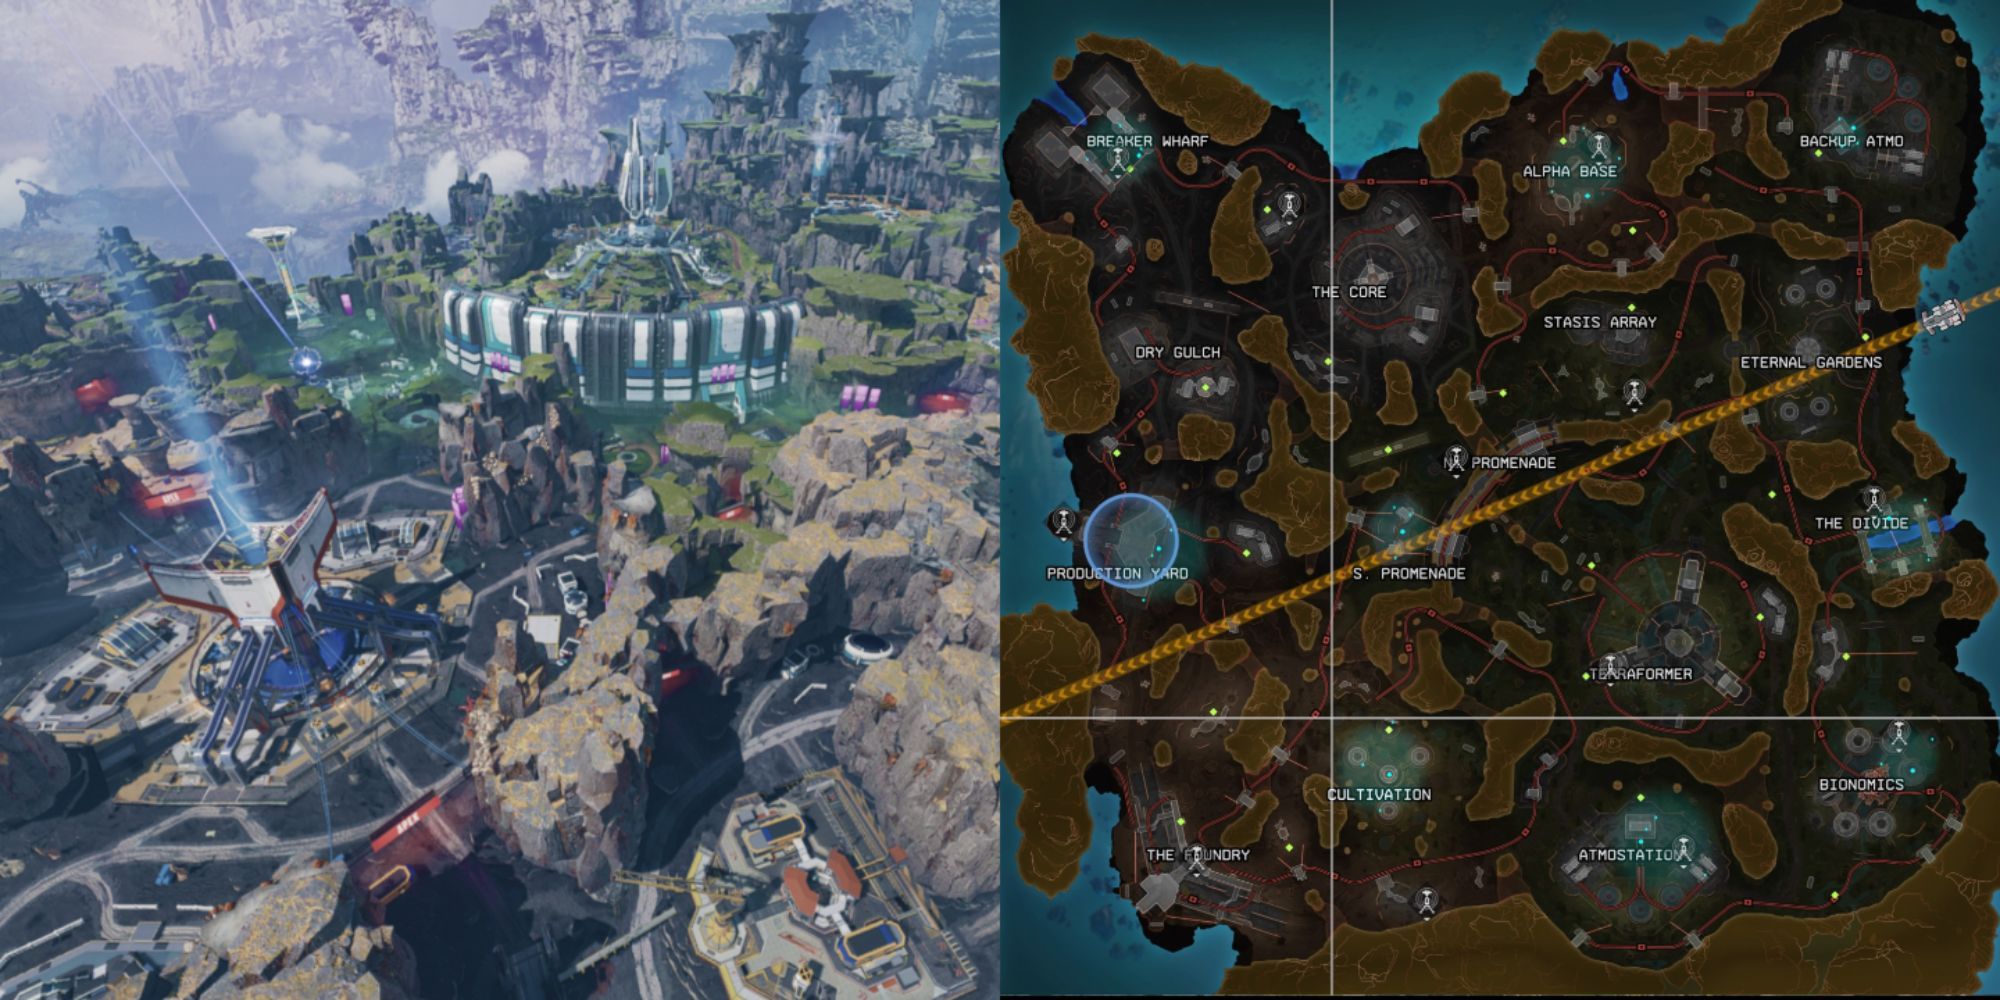 Apex Legends Broken Moon Map showing all locations